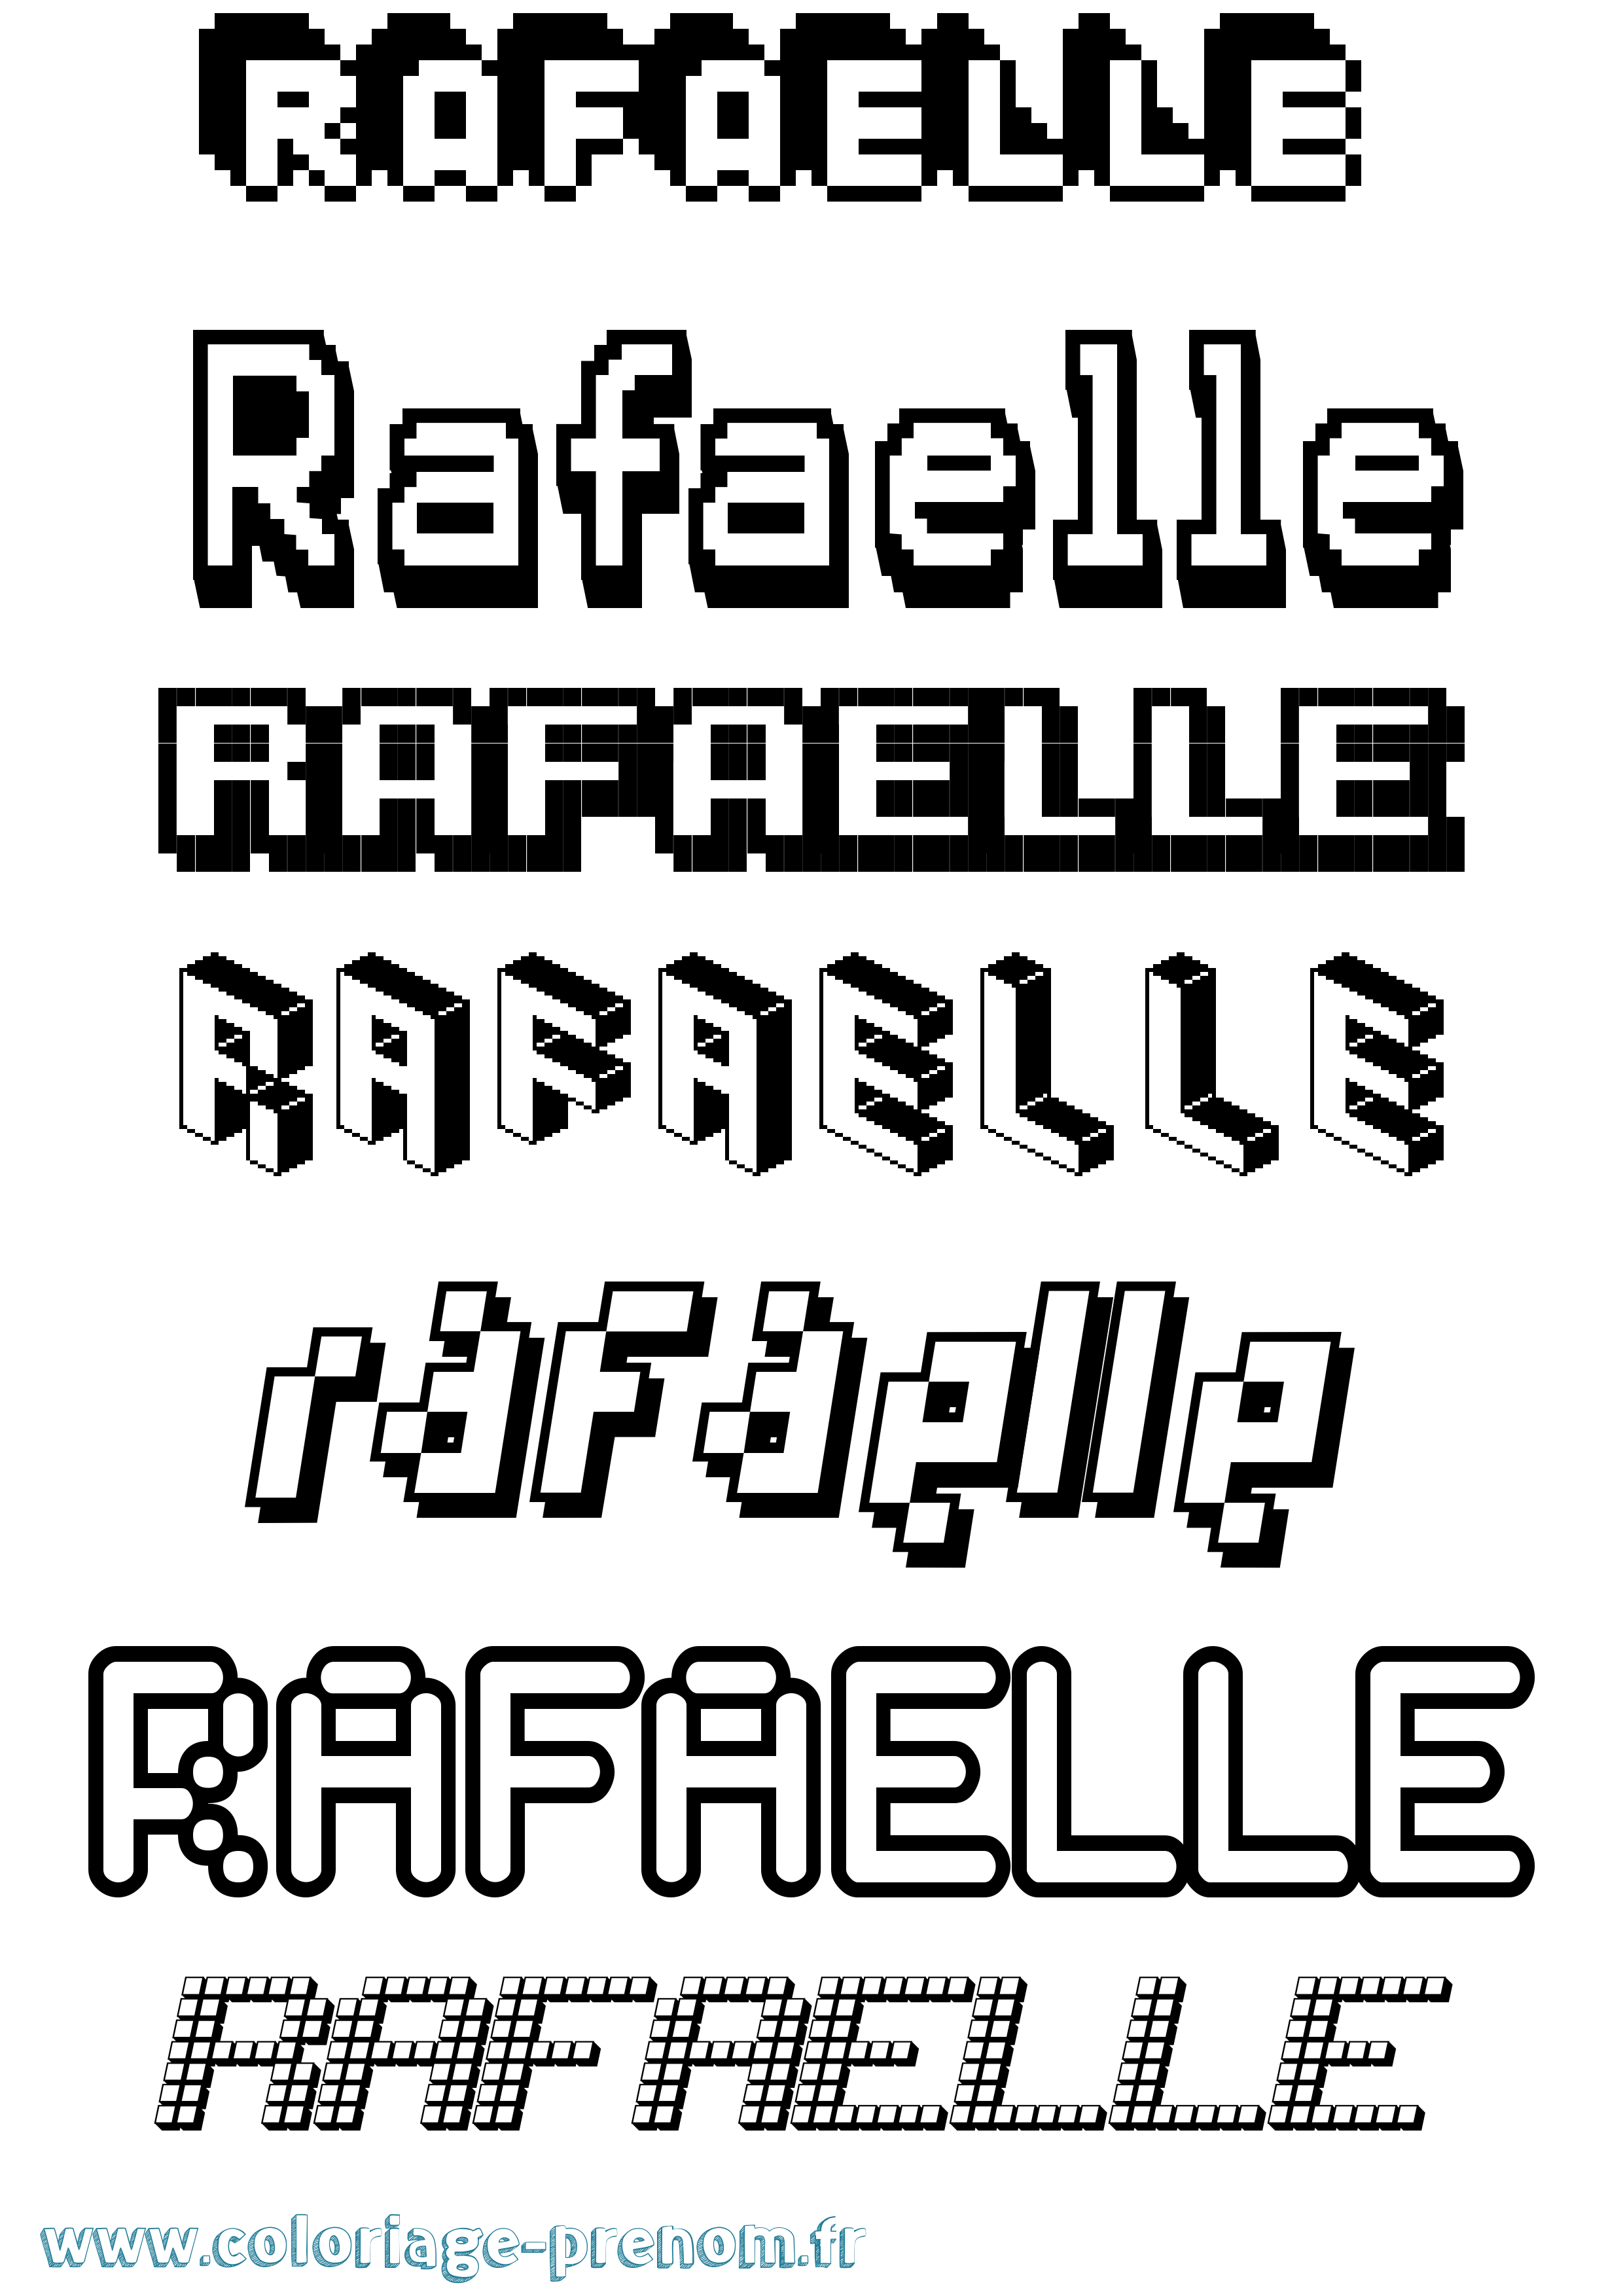 Coloriage prénom Rafaelle Pixel